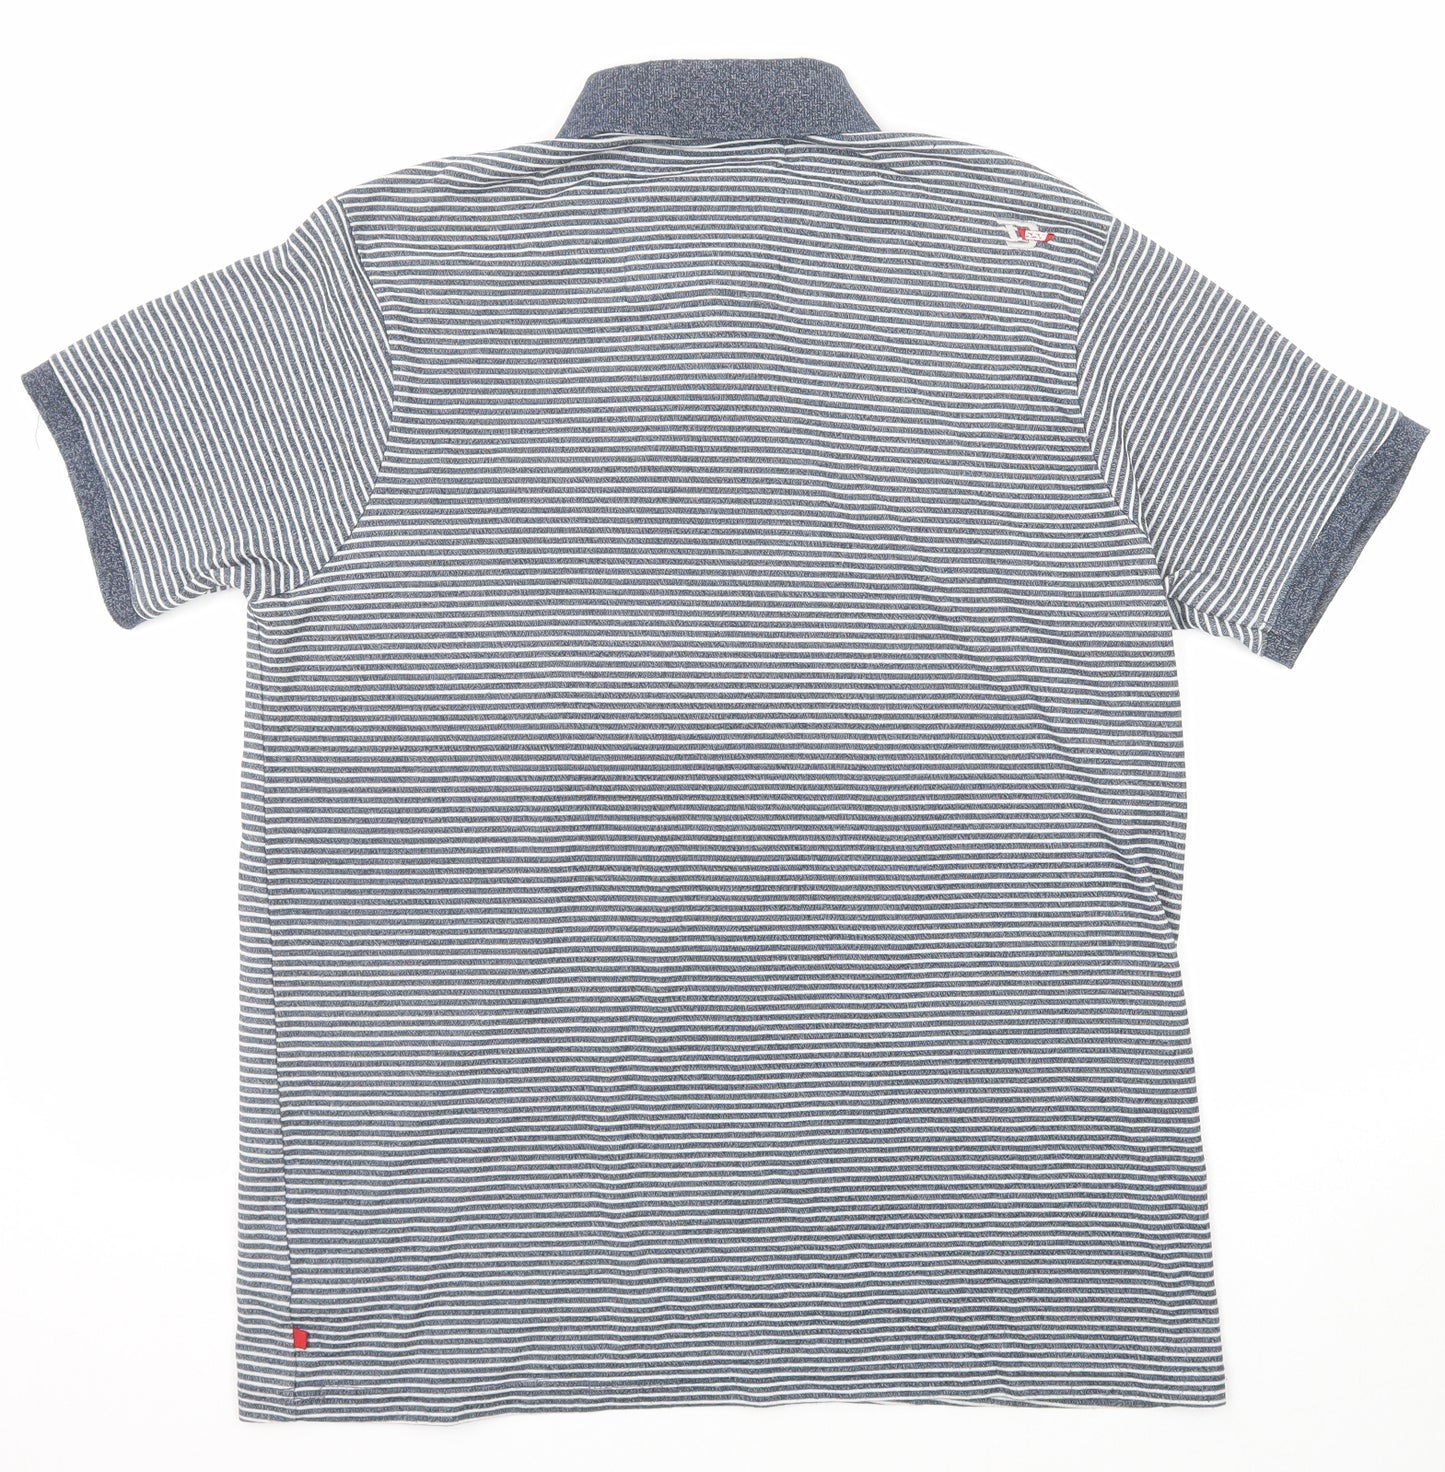 D555 Mens Blue Striped Cotton Polo Size L Collared Button